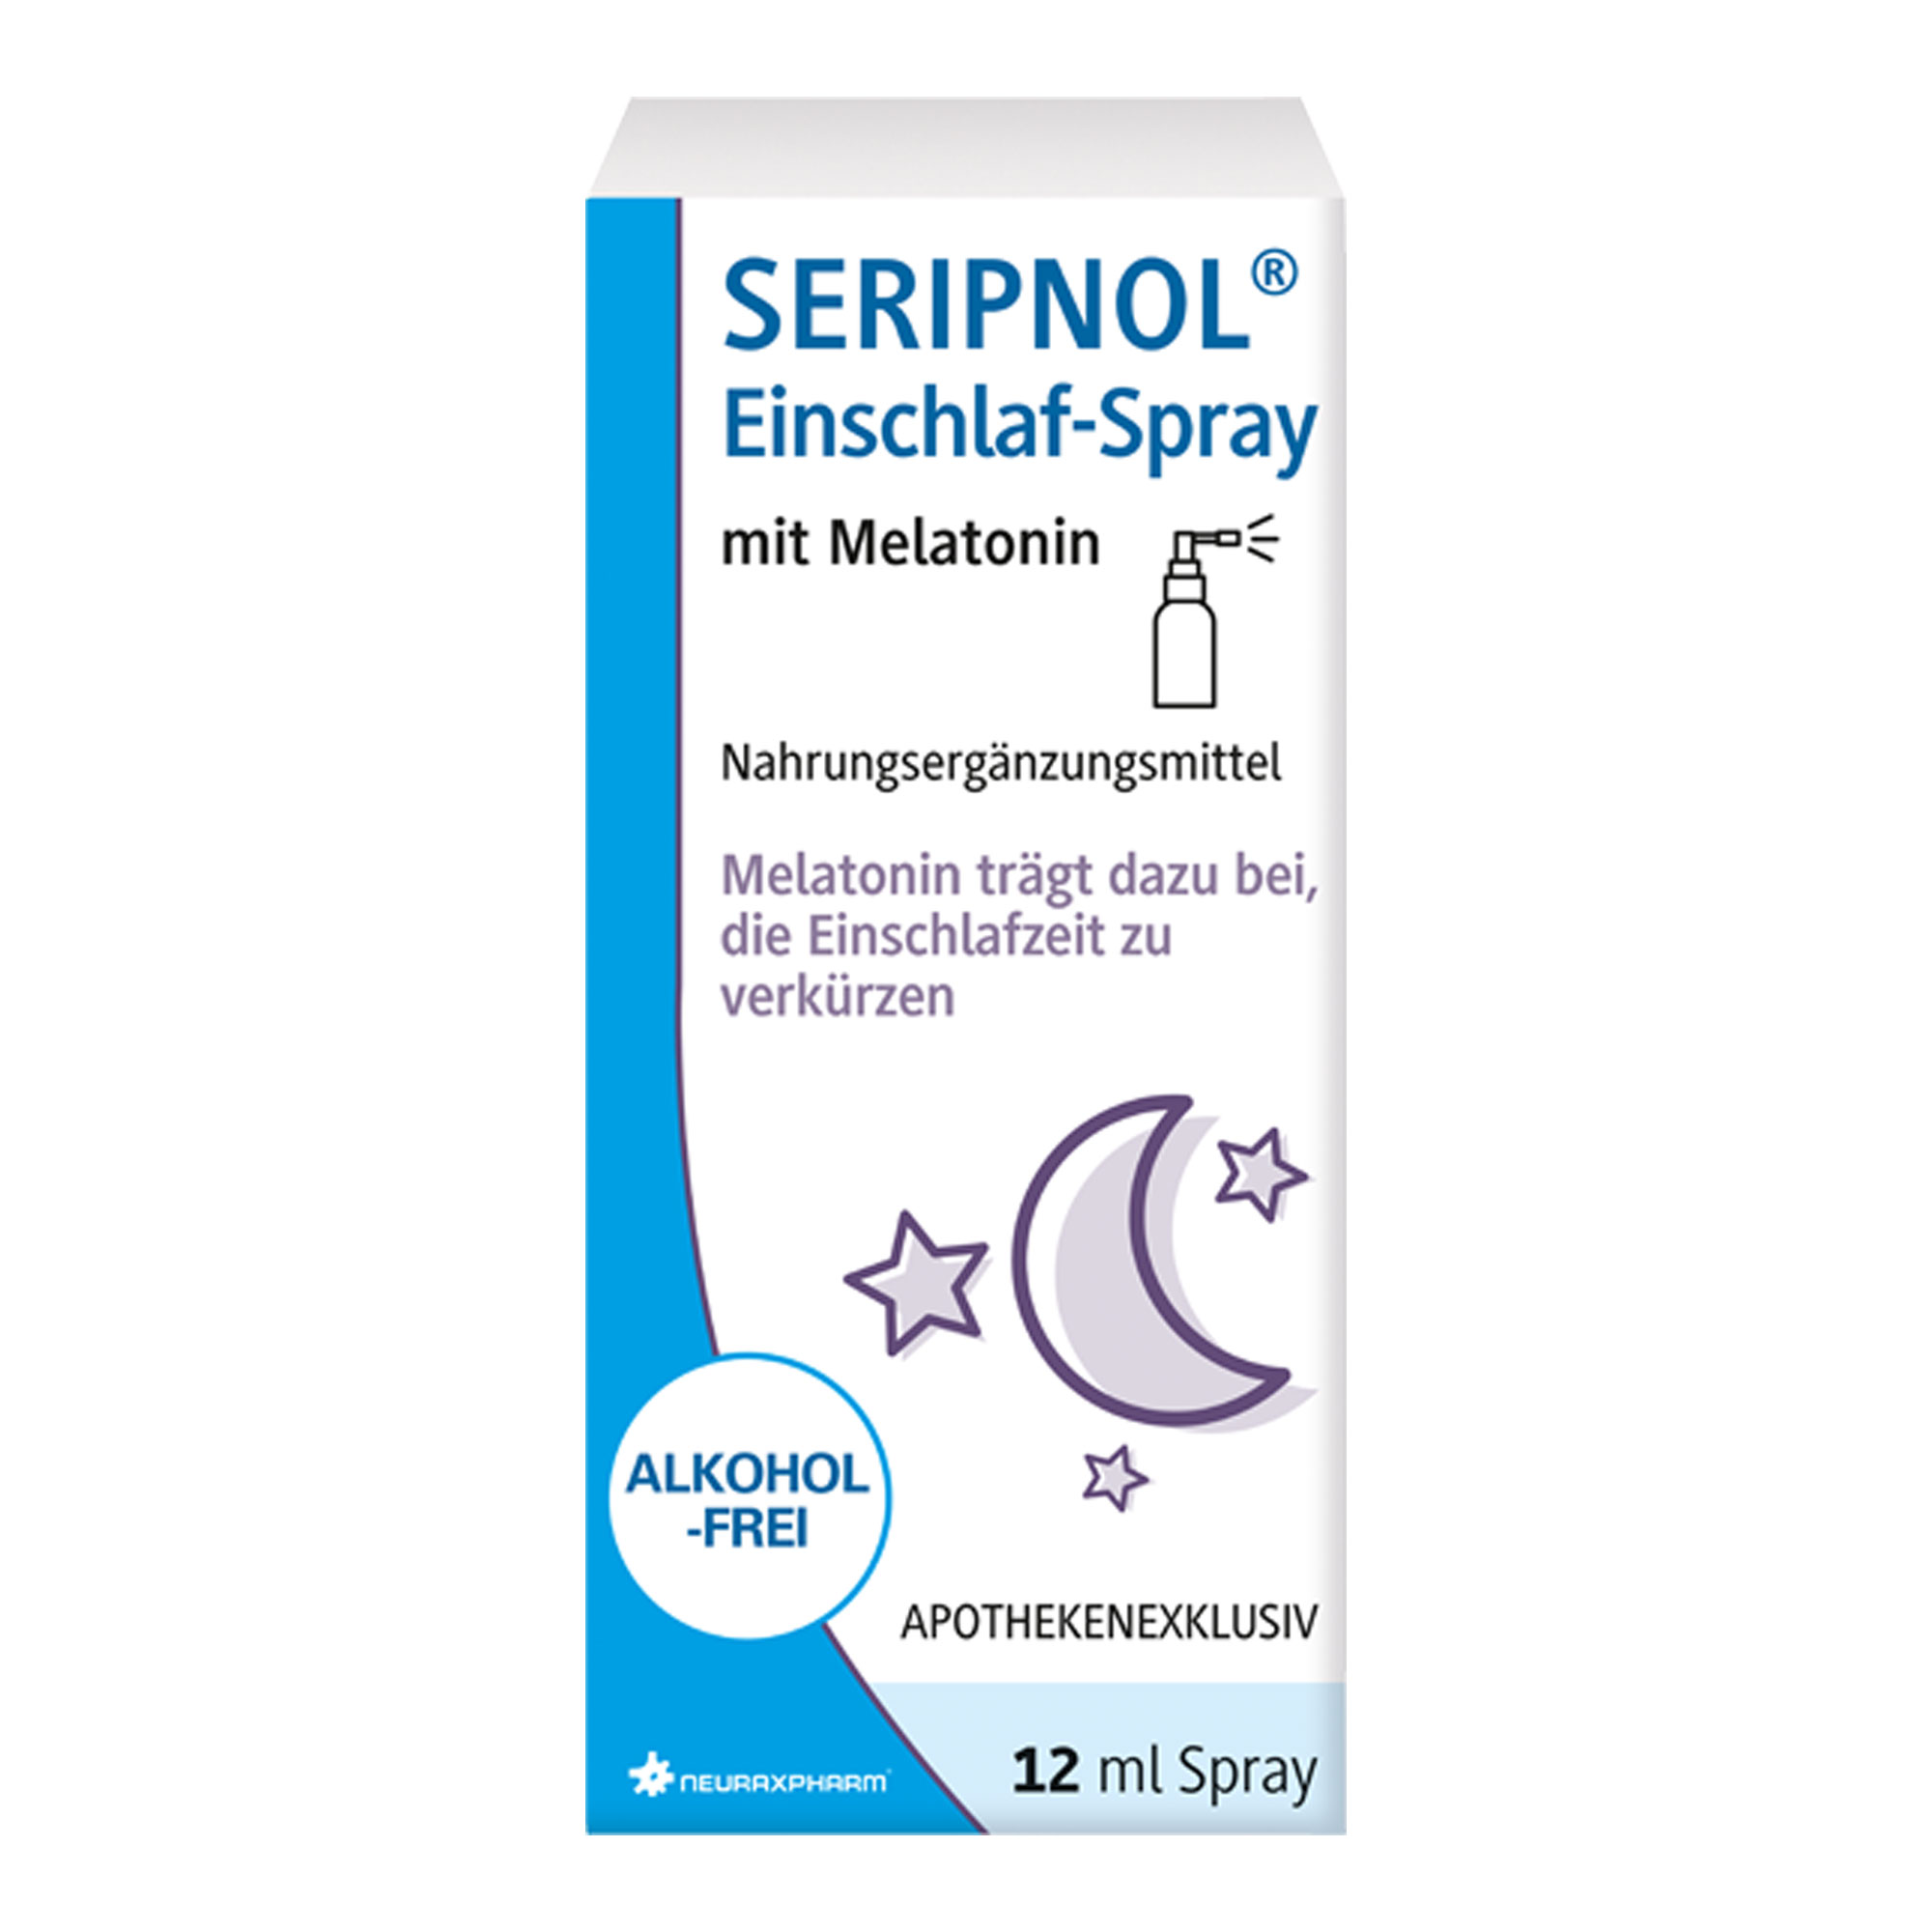 Seripnol Einschlaf-Spray mit Melatonin